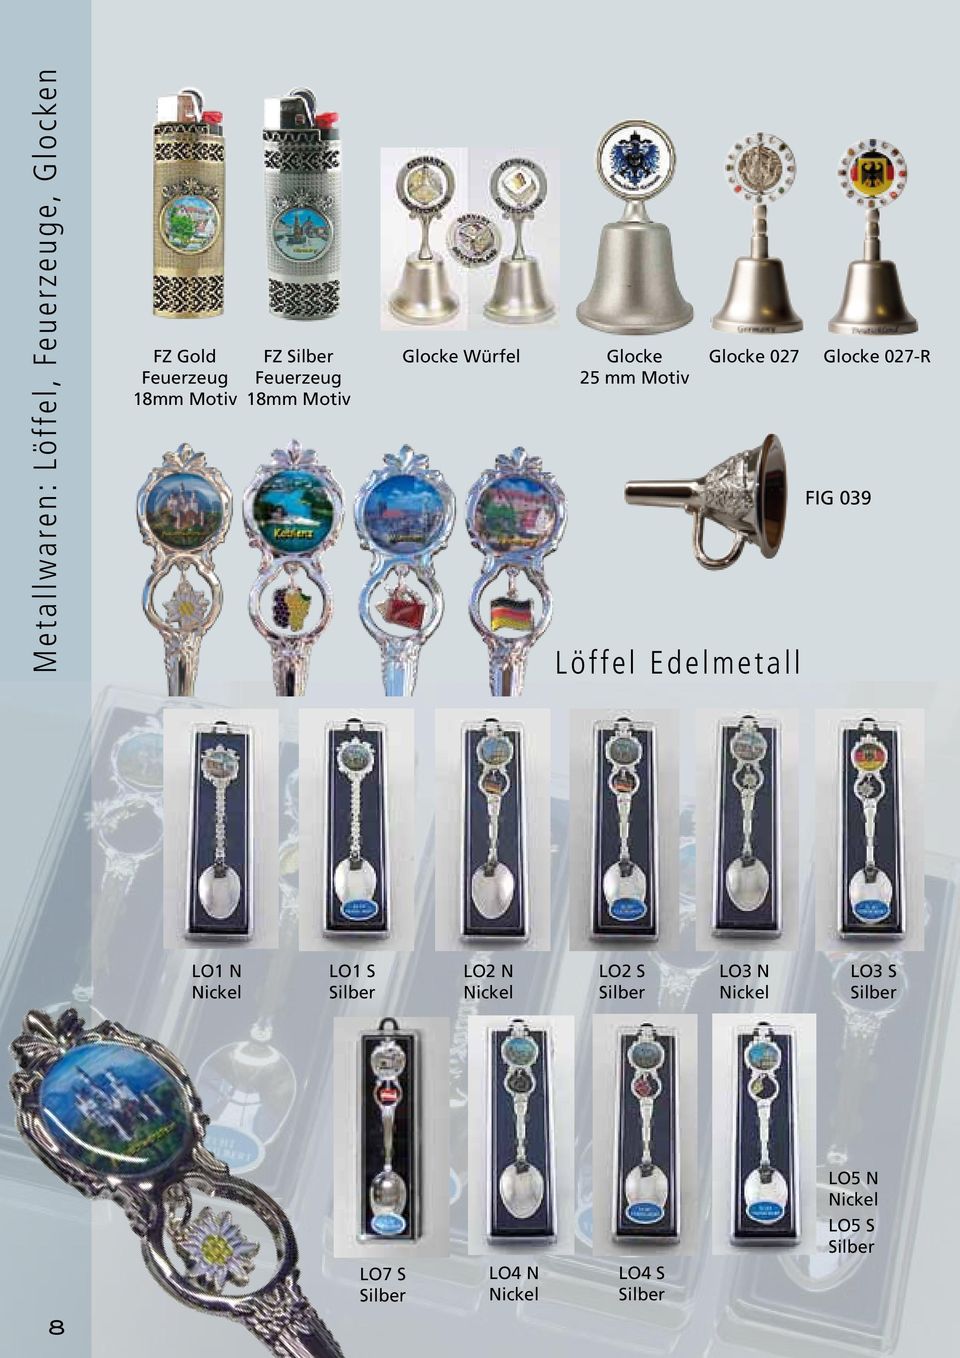 Edelmetall Glocke 027-R FIG 039 LO1 N Nickel LO1 S Silber LO2 N Nickel LO2 S